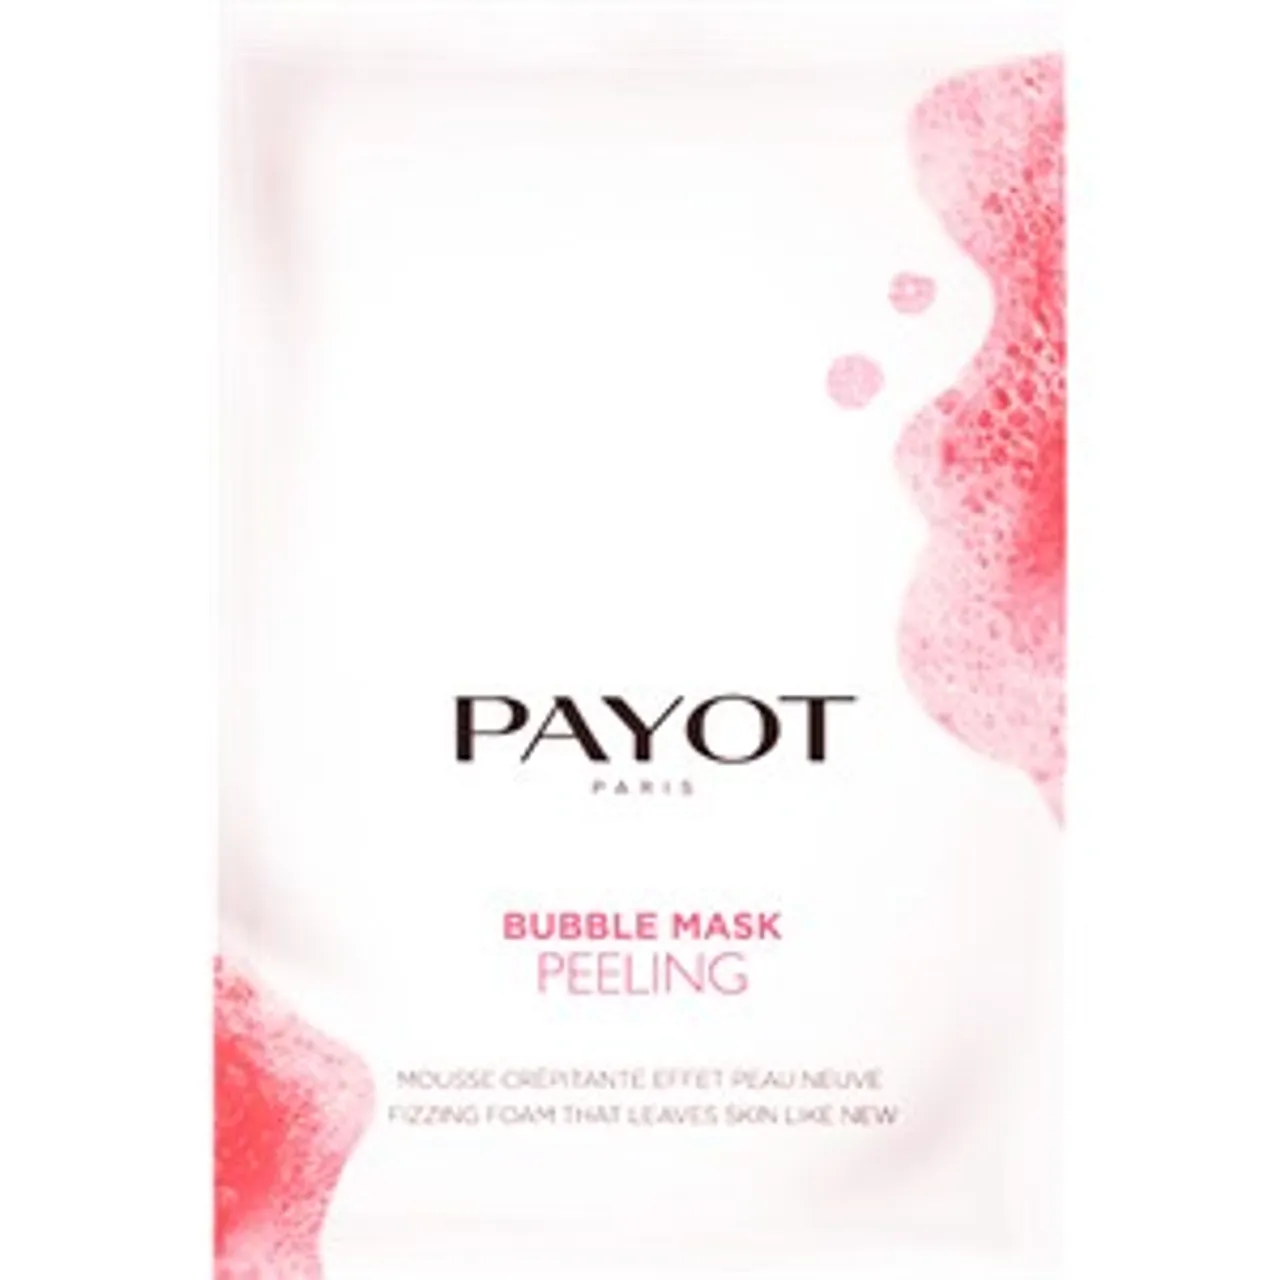 Payot Bubble Mask Peeling Female 5 ml